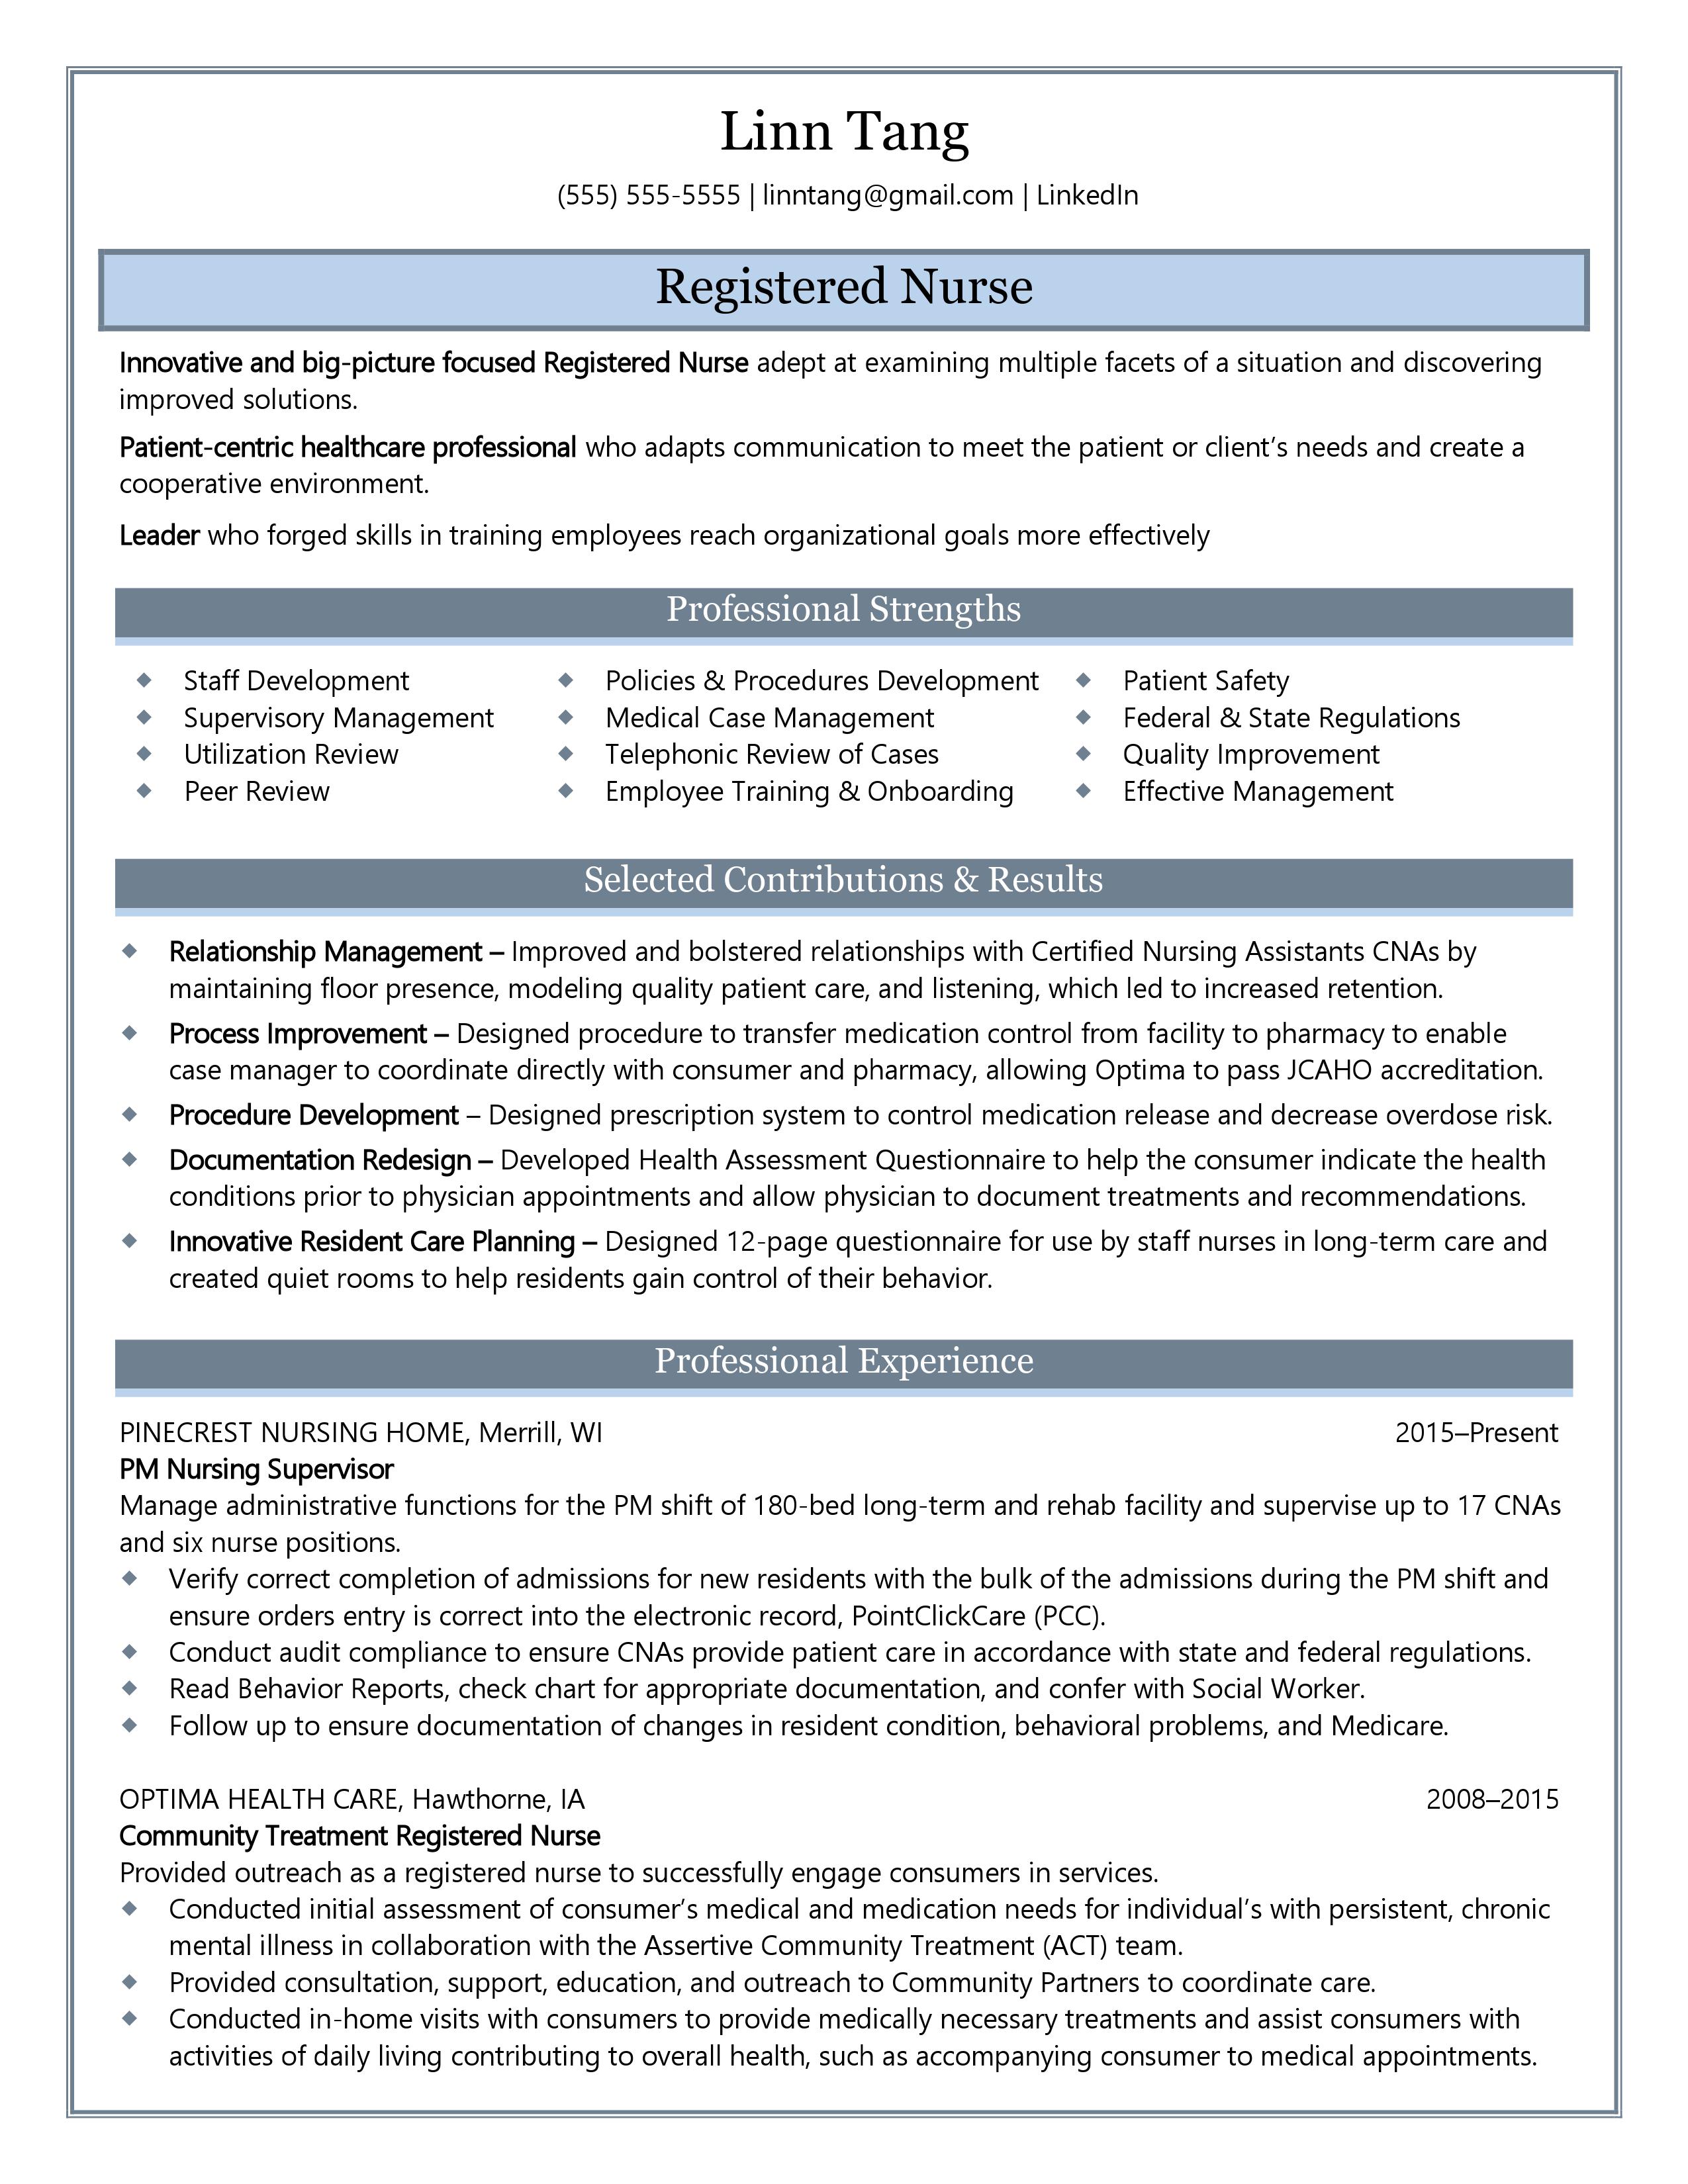 Professional Resume Examples Registered Nurse Resume Sample 1 professional resume examples|wikiresume.com